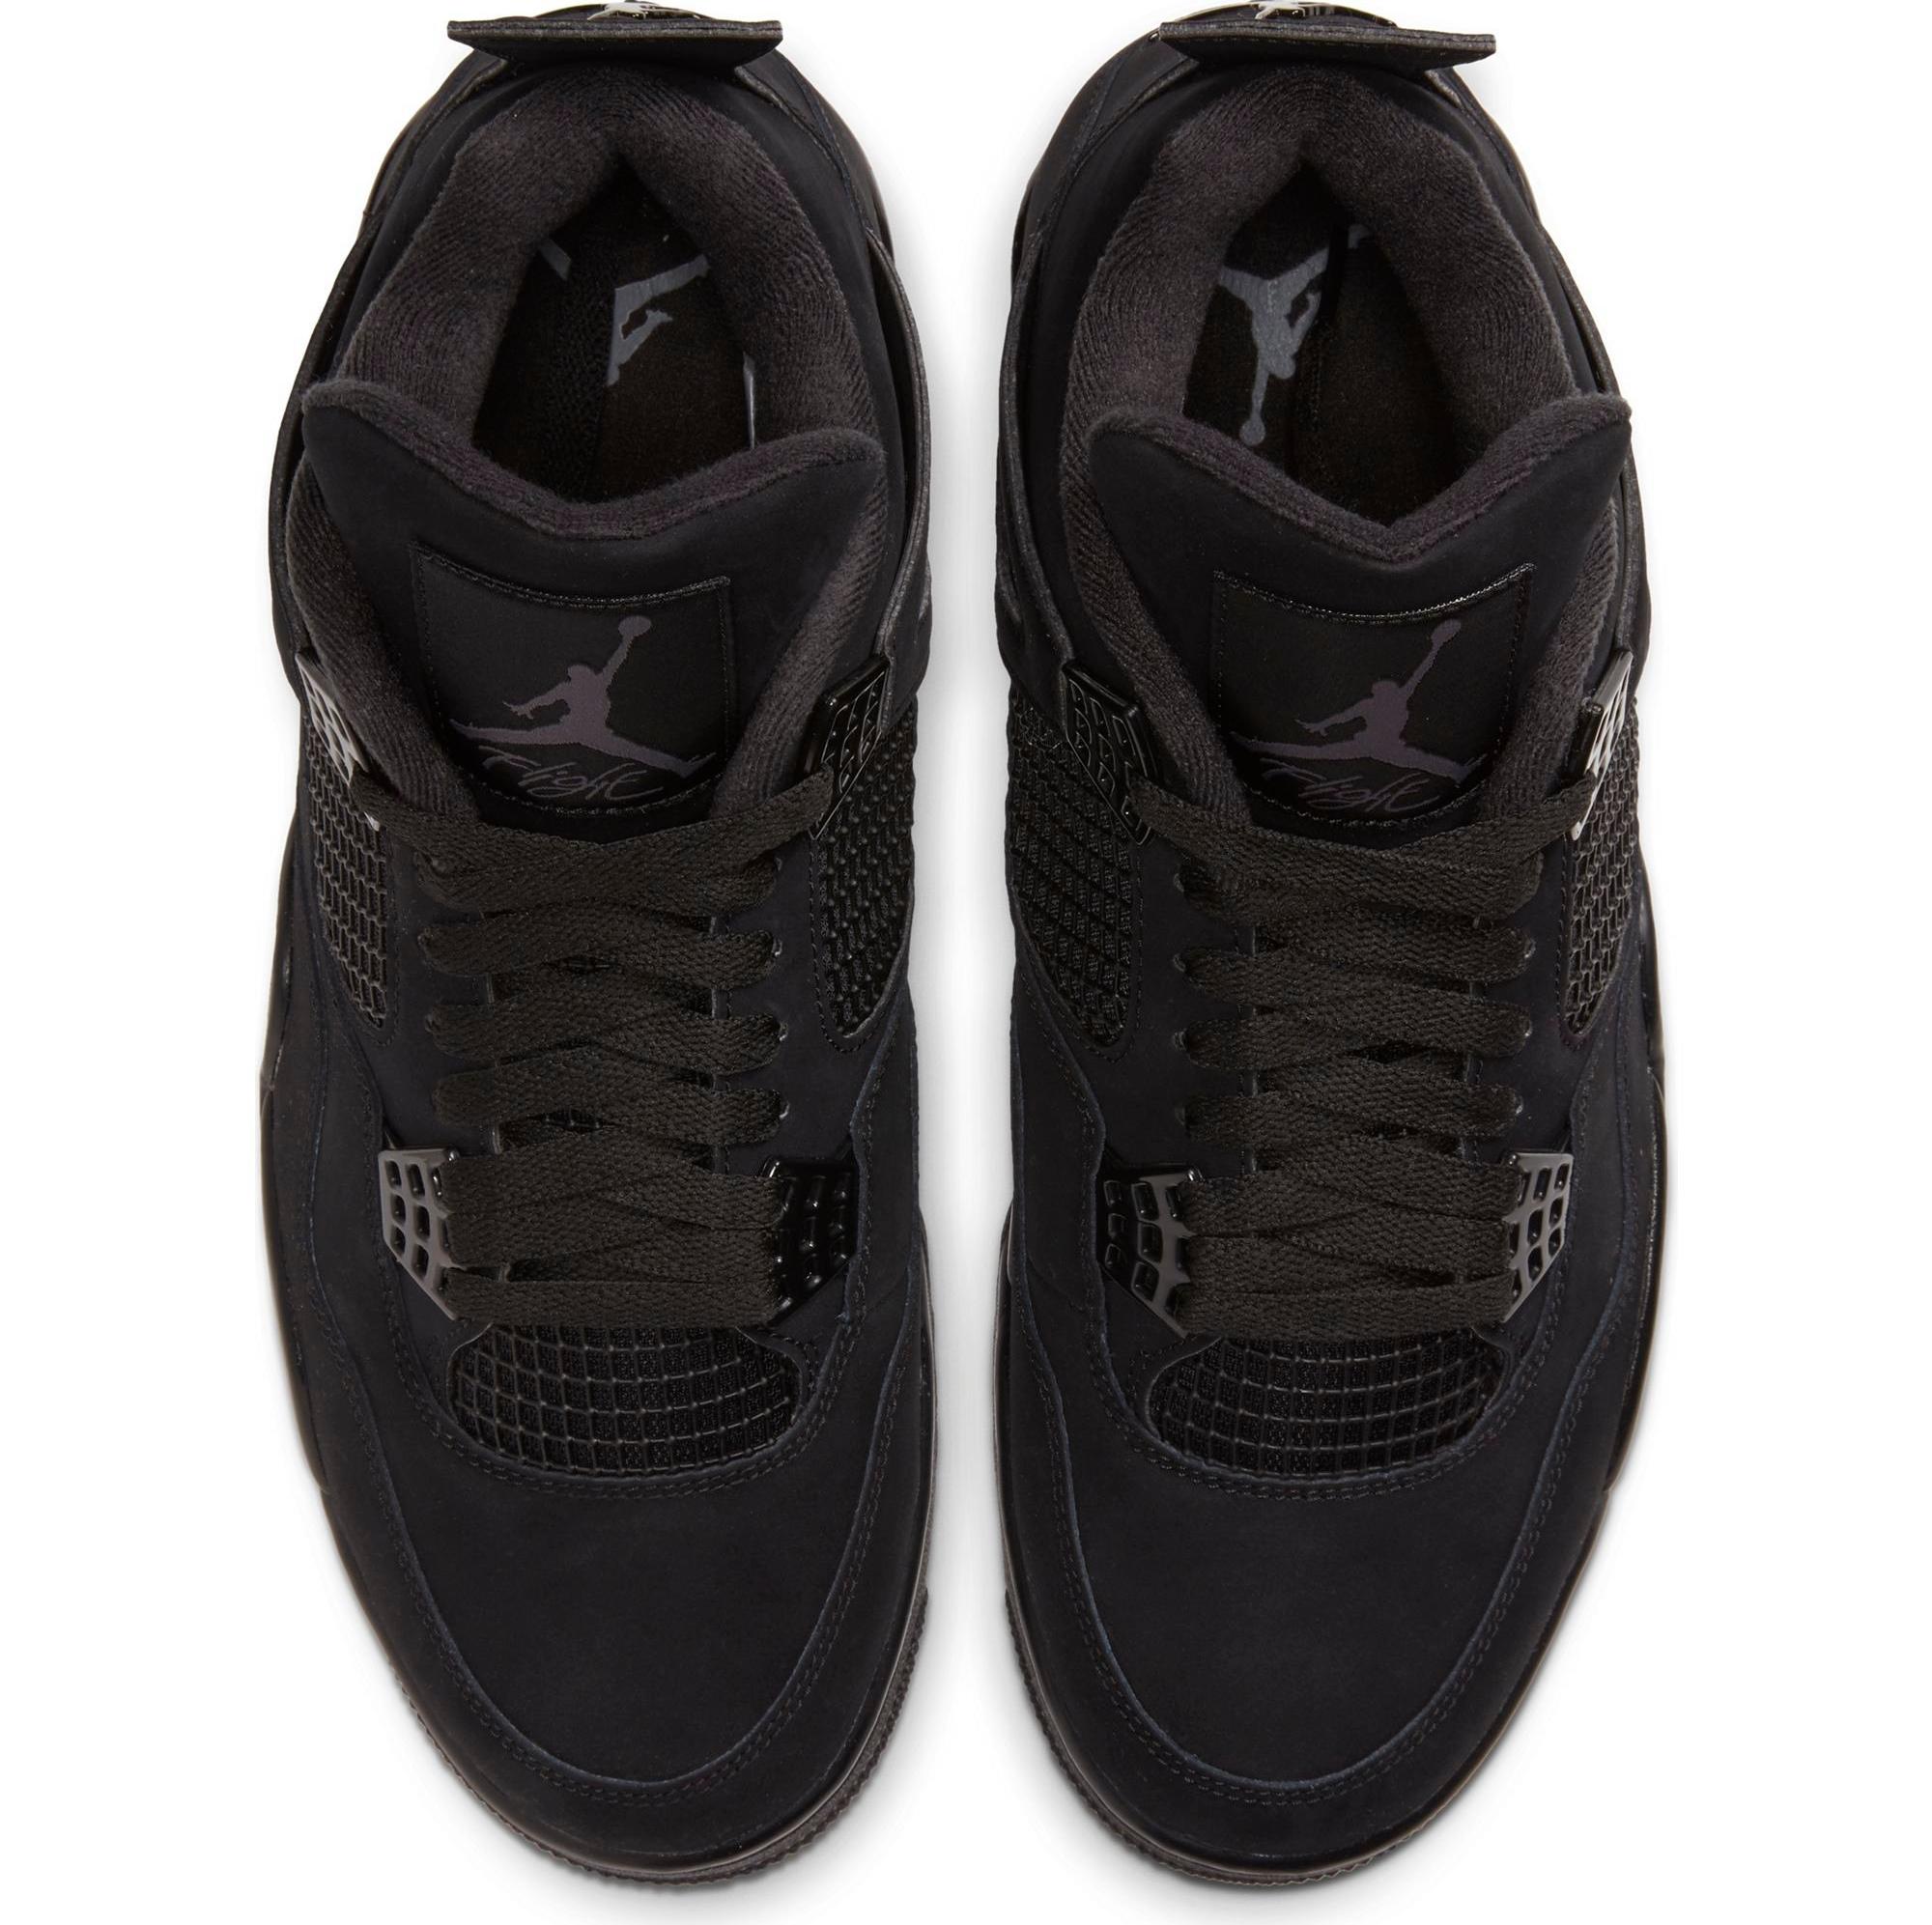 Air Jordan 4 Retro Black Cat (2020) – Court Order